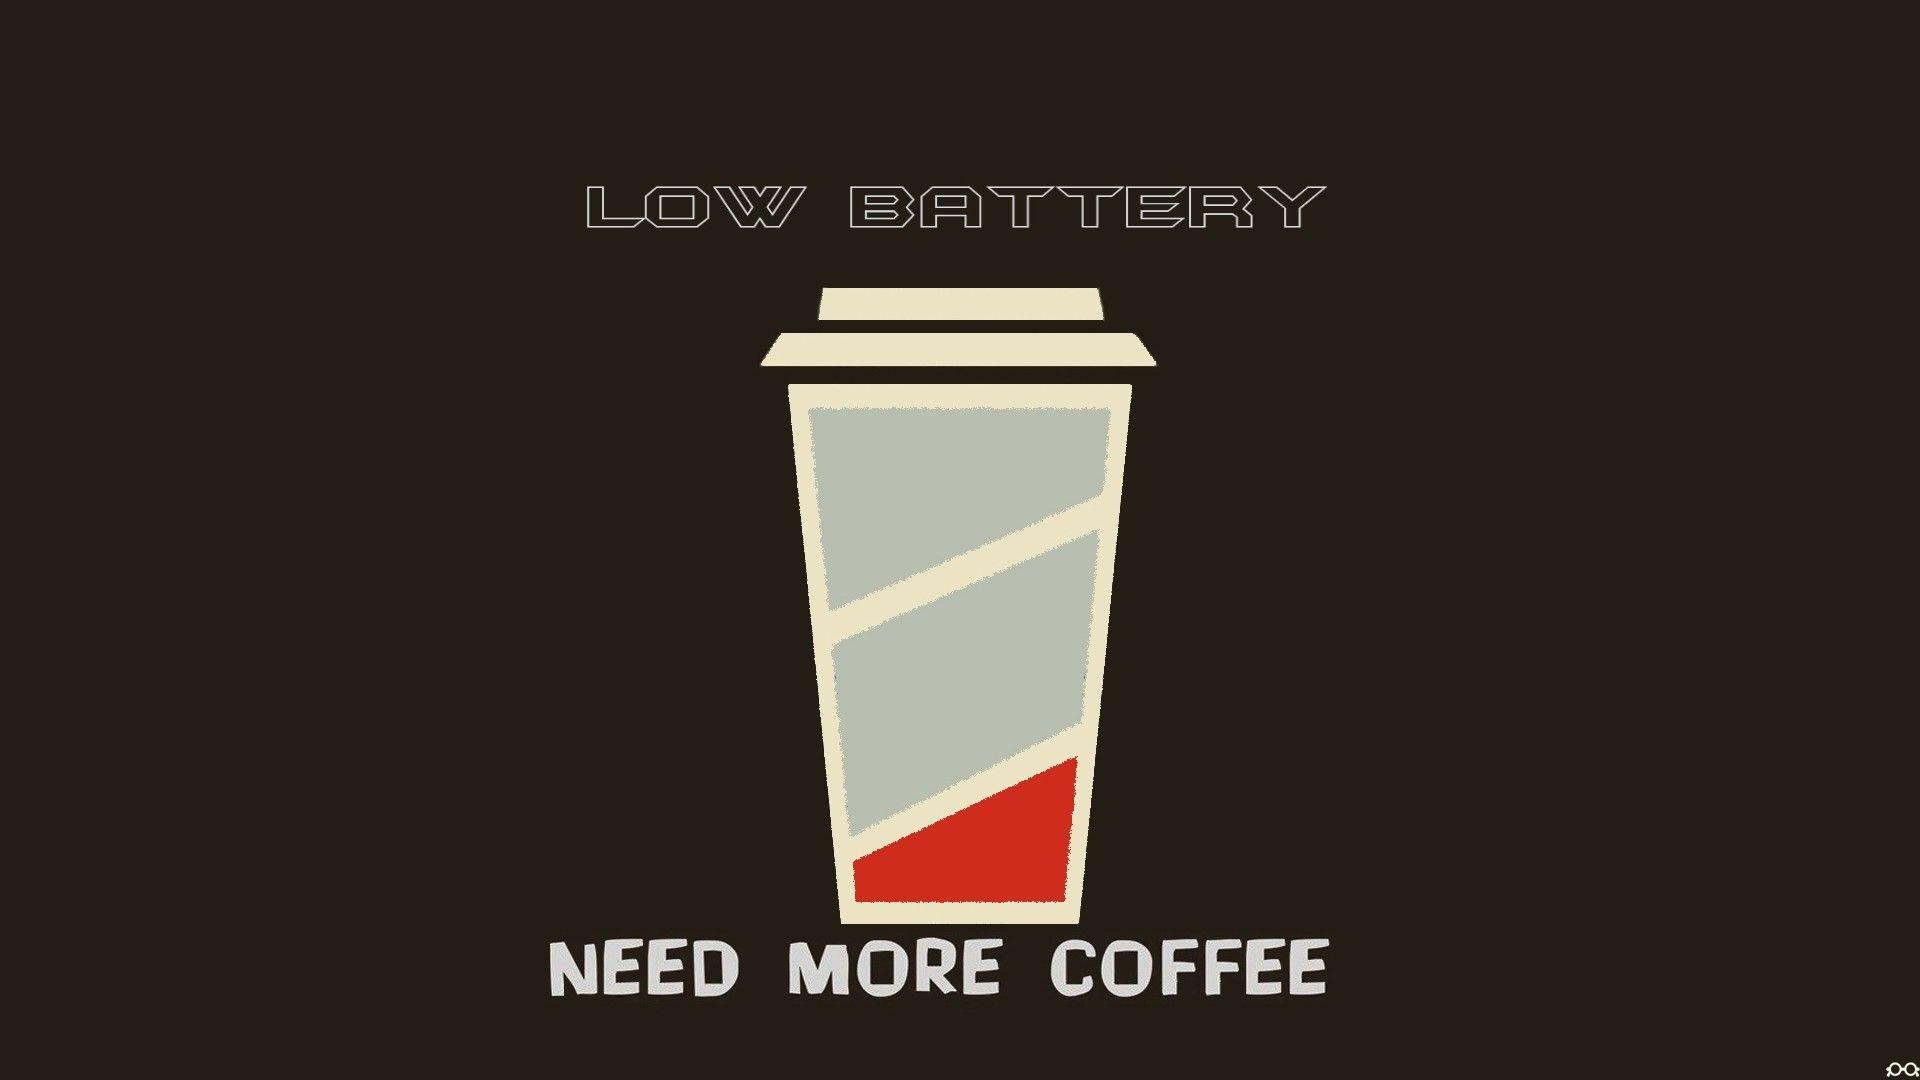 Batt Tag wallpaper: Low Battery Refill Batt Coffee Boredom Brown